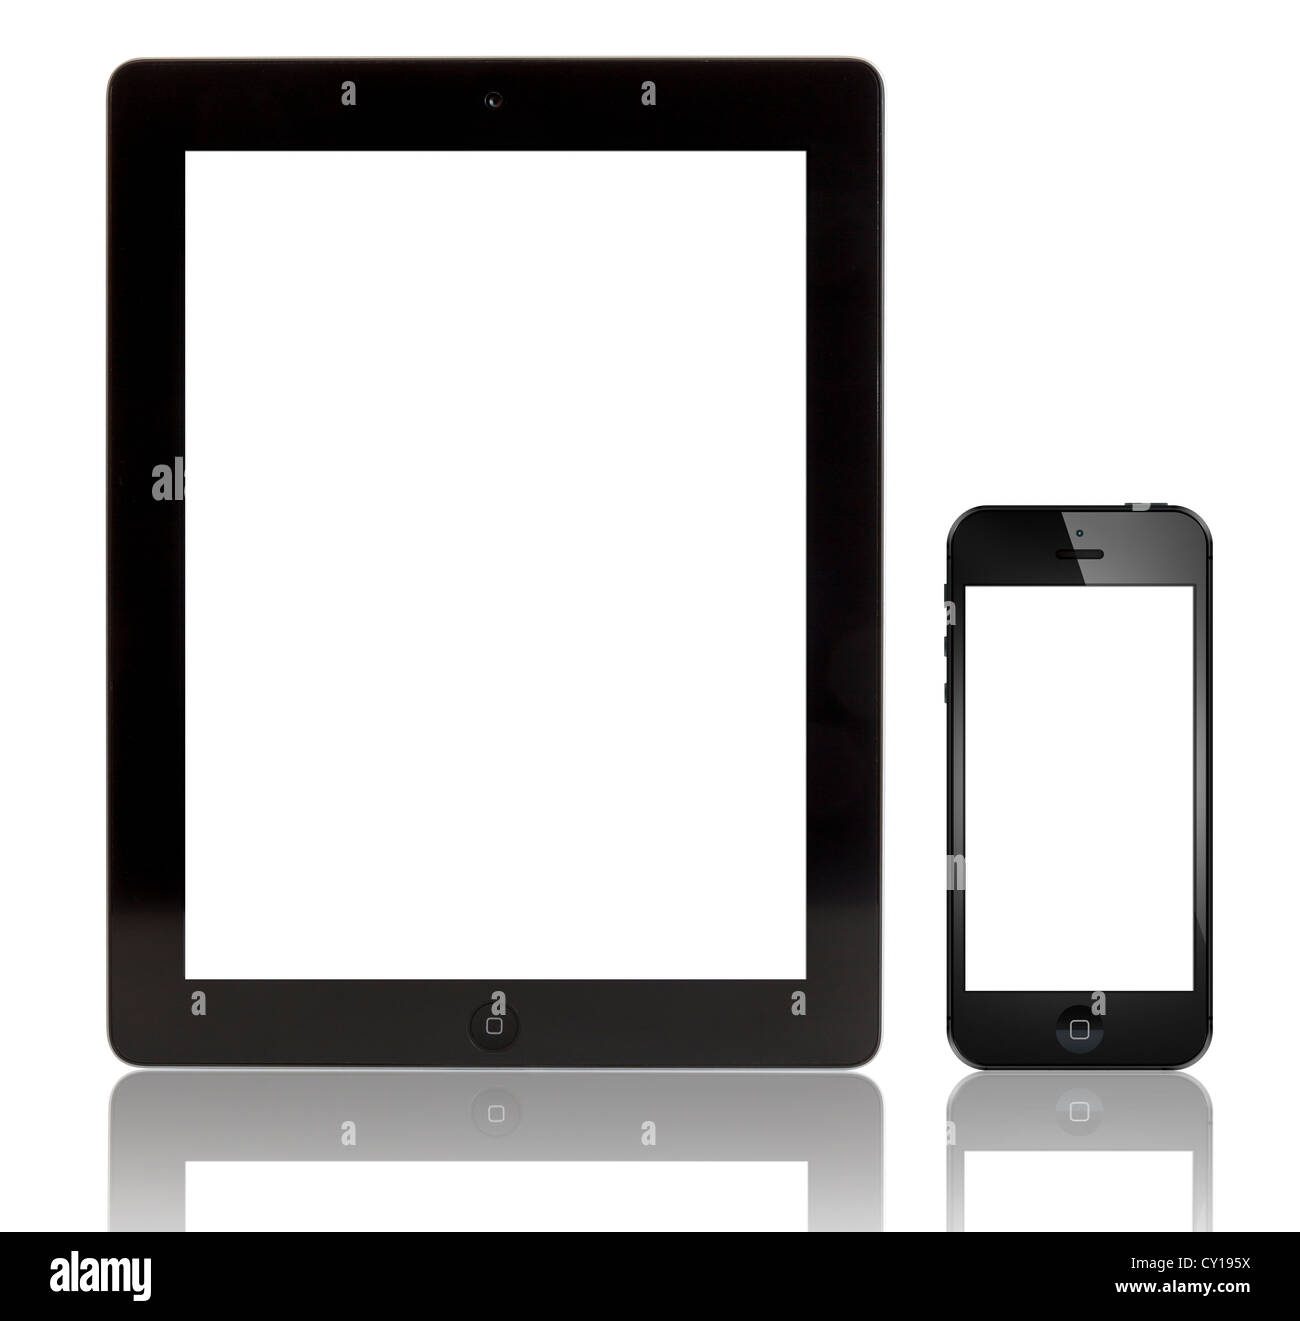 iPad und iPhone 5 mit leerer Bildschirm Stockfoto